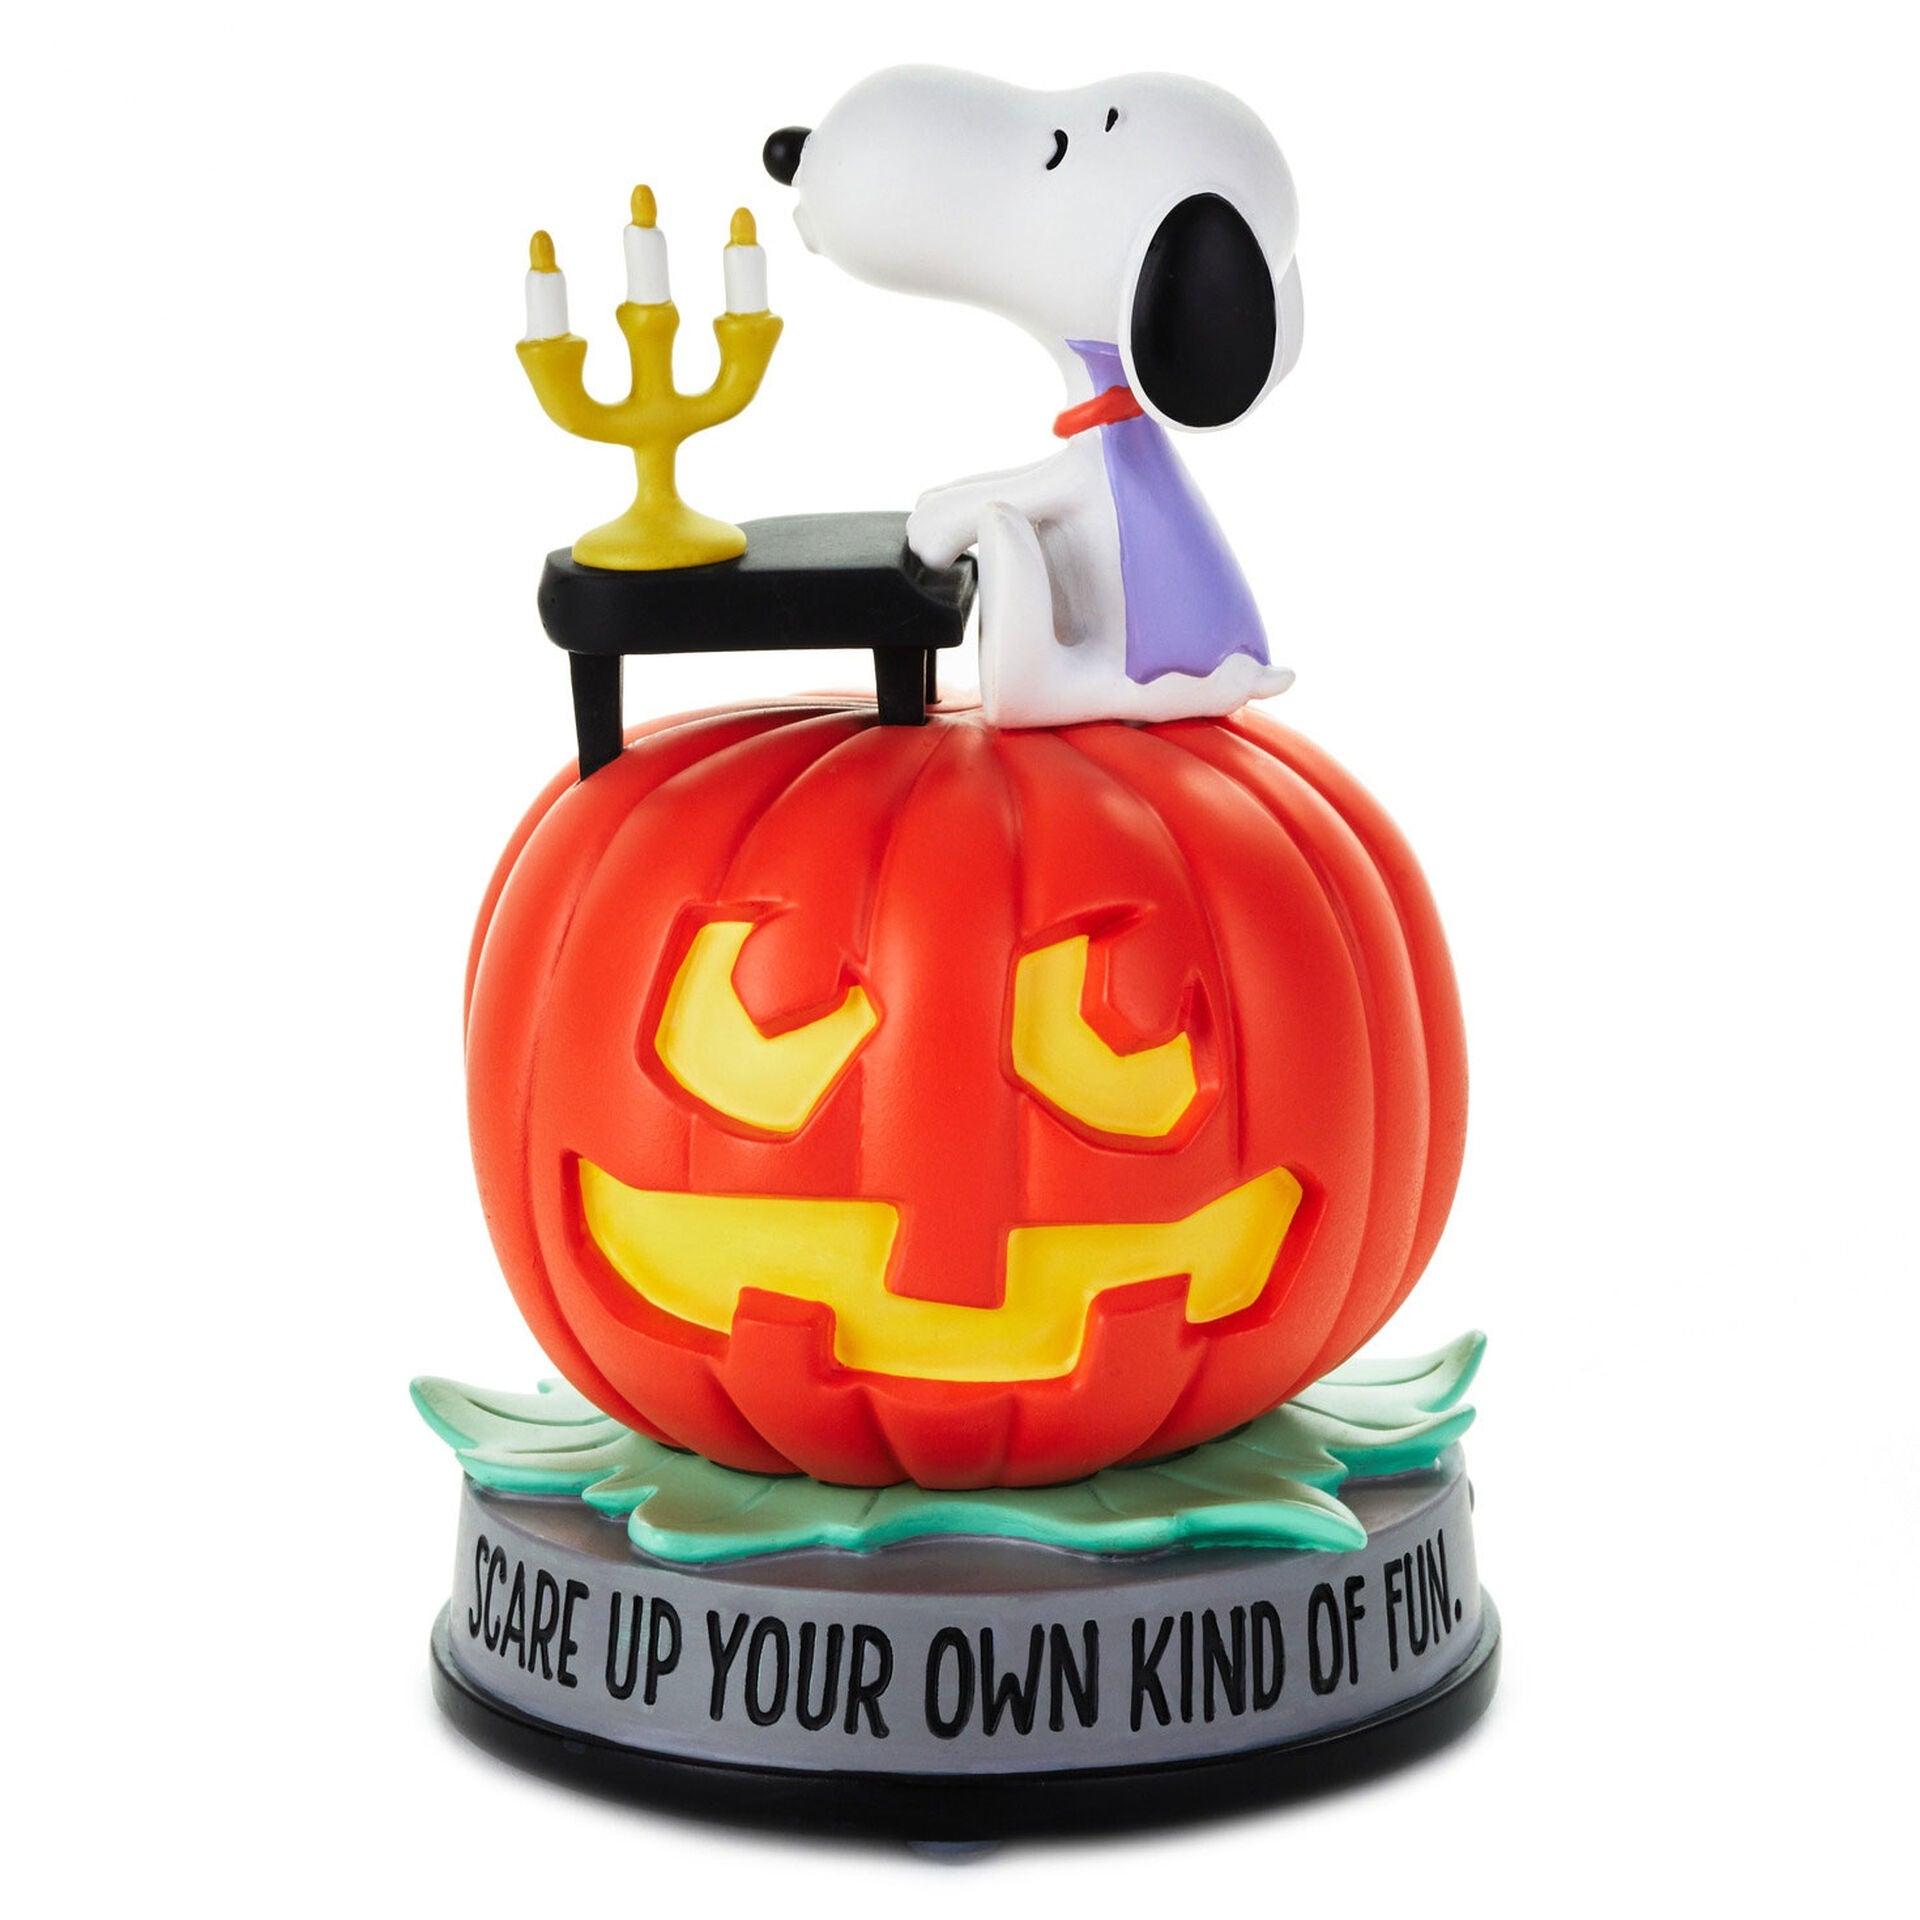 Peanuts® Spooky Snoopy Figurine With Sound, 5.5"